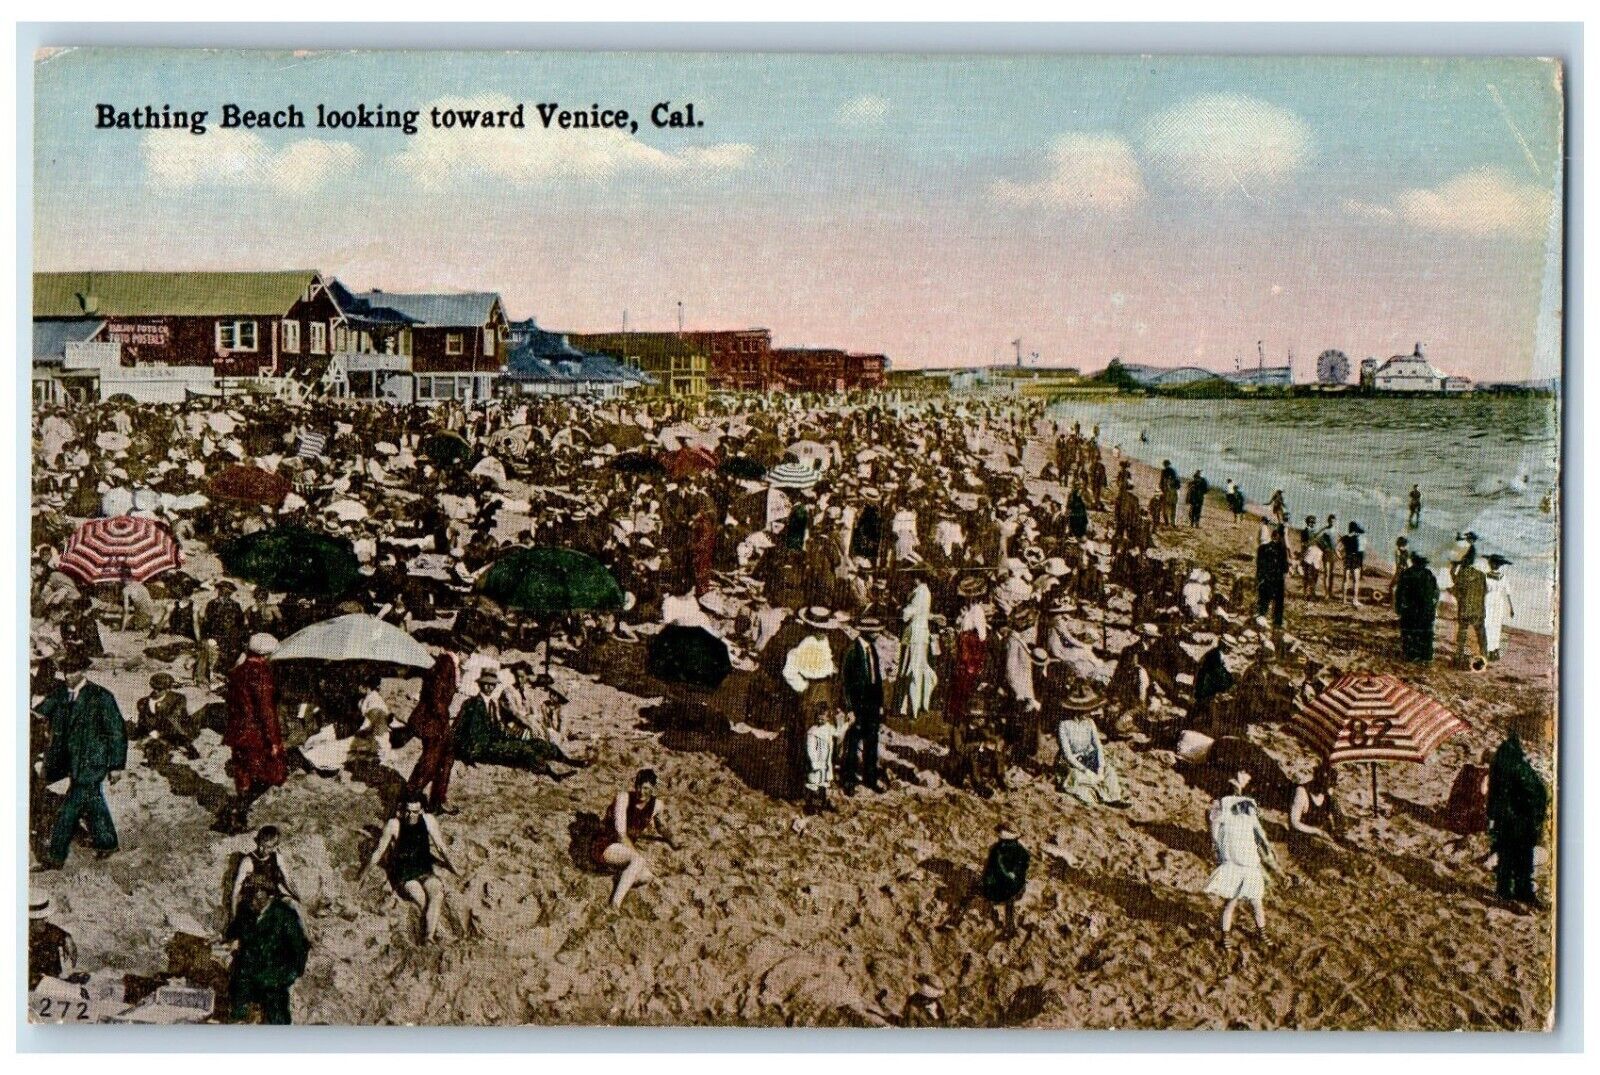 1910 Bathing Beach Crowd Looking Toward Venice California CA Vintage Postcard